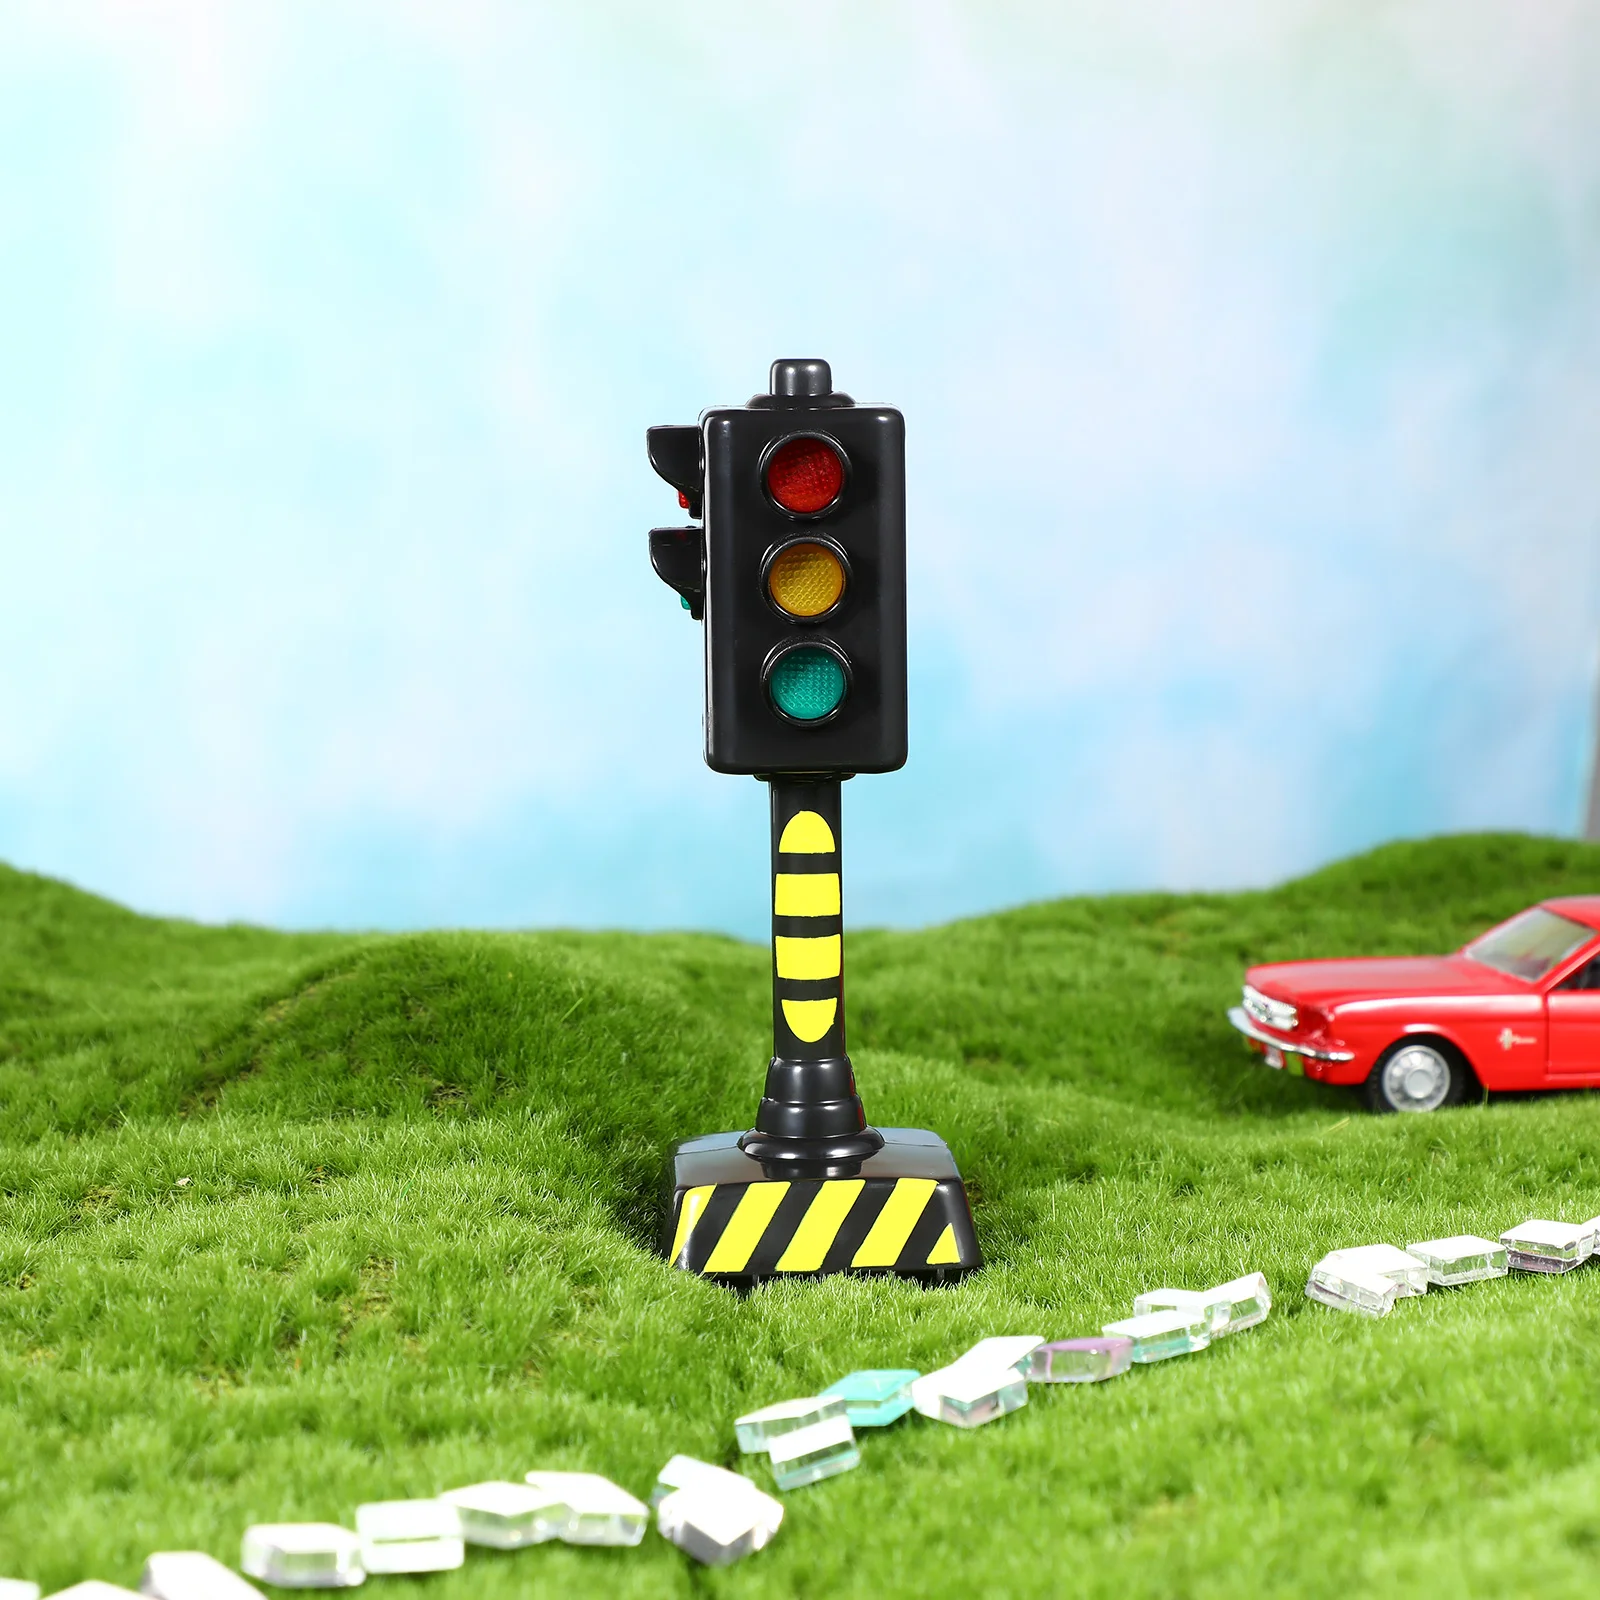 2Pcs Kids Educational Toyss Traffic Light Models Simulation Traffic Lights Early Education Playset for Pretend Play Emergency